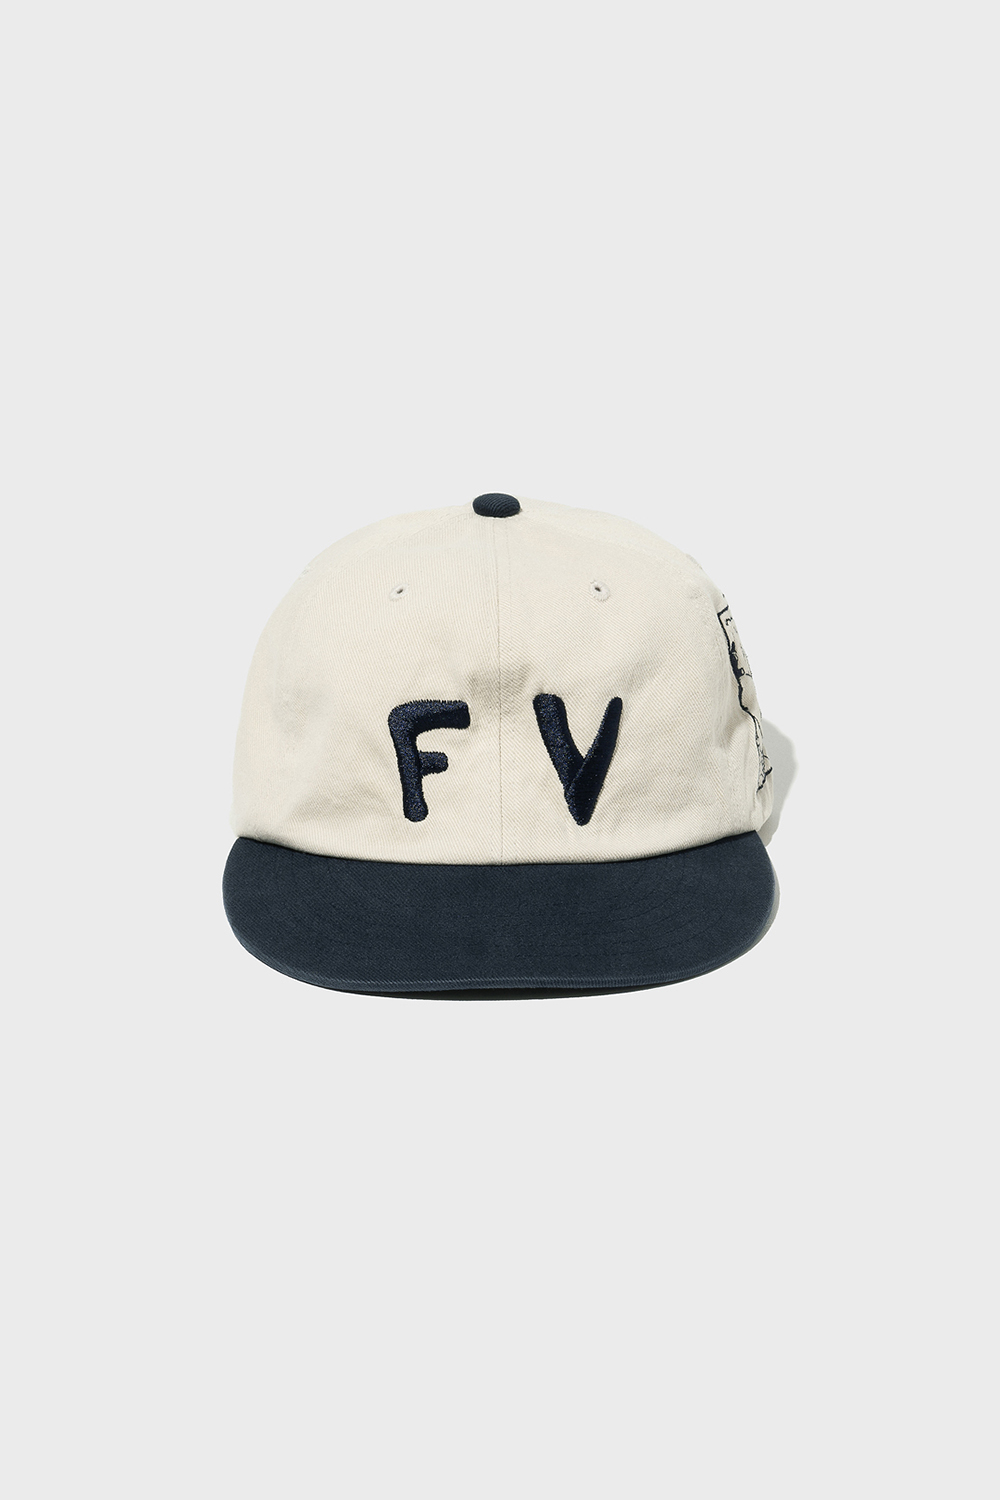 FV BALL CAP (IVORY NAVY)